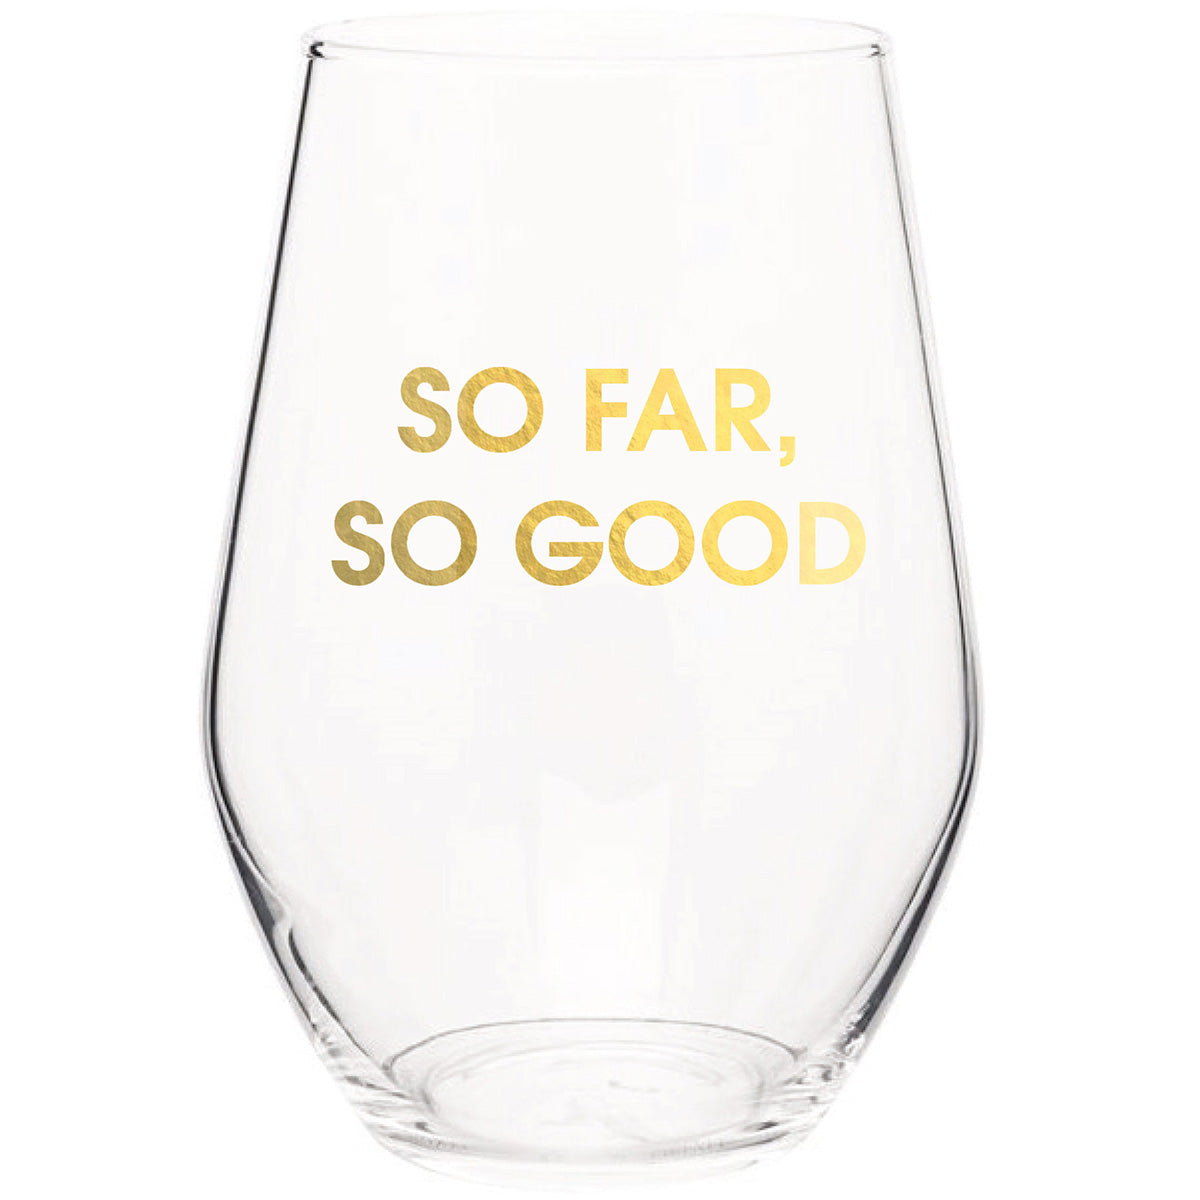 So Far So Good - Gold Foil Stemless Wine Glass (Slight Imperfections)